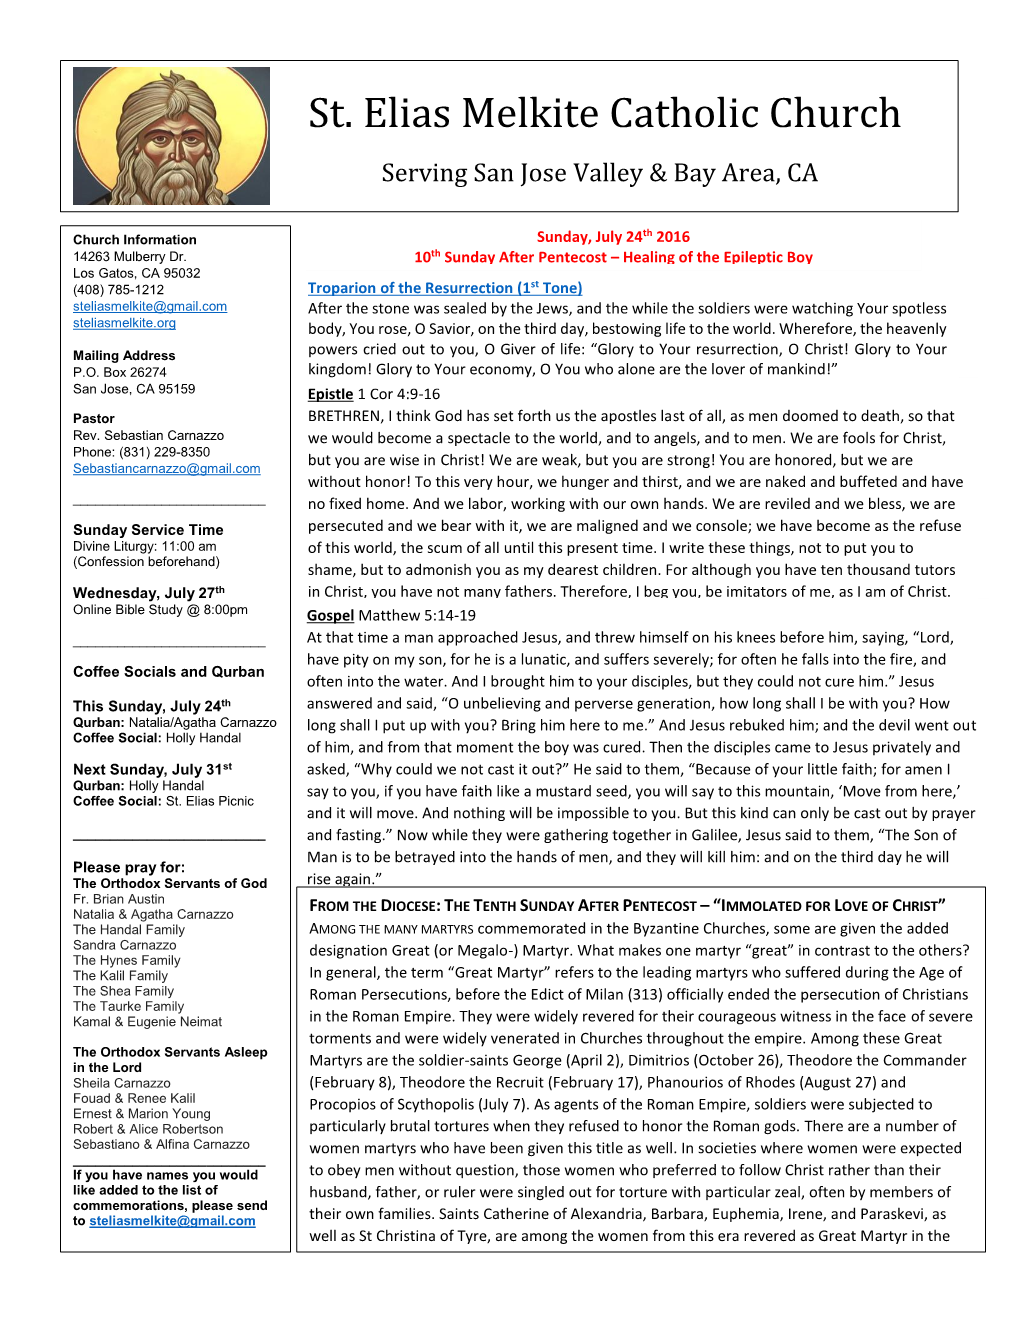 St. Elias Melkite Catholic Church Serving San Jose Valley & Bay Area, CA